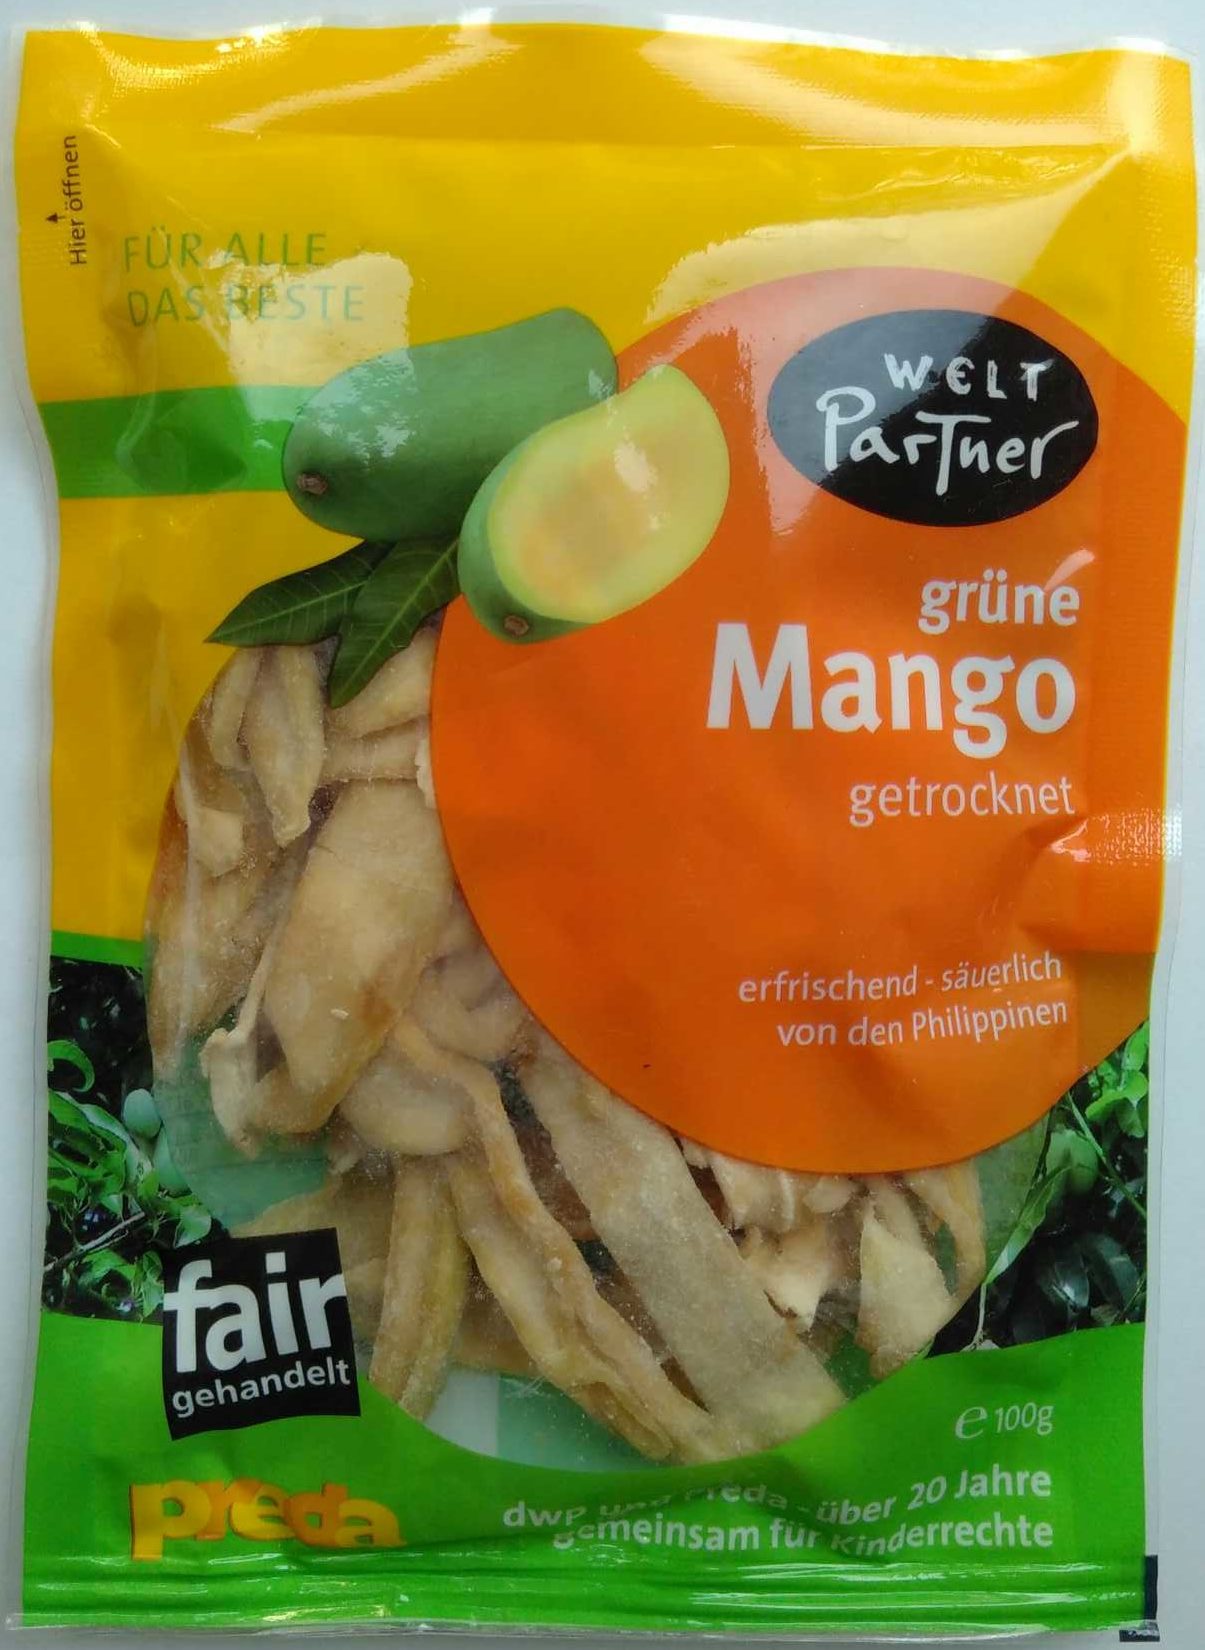 Grüne Mango getrocknet - Produkt